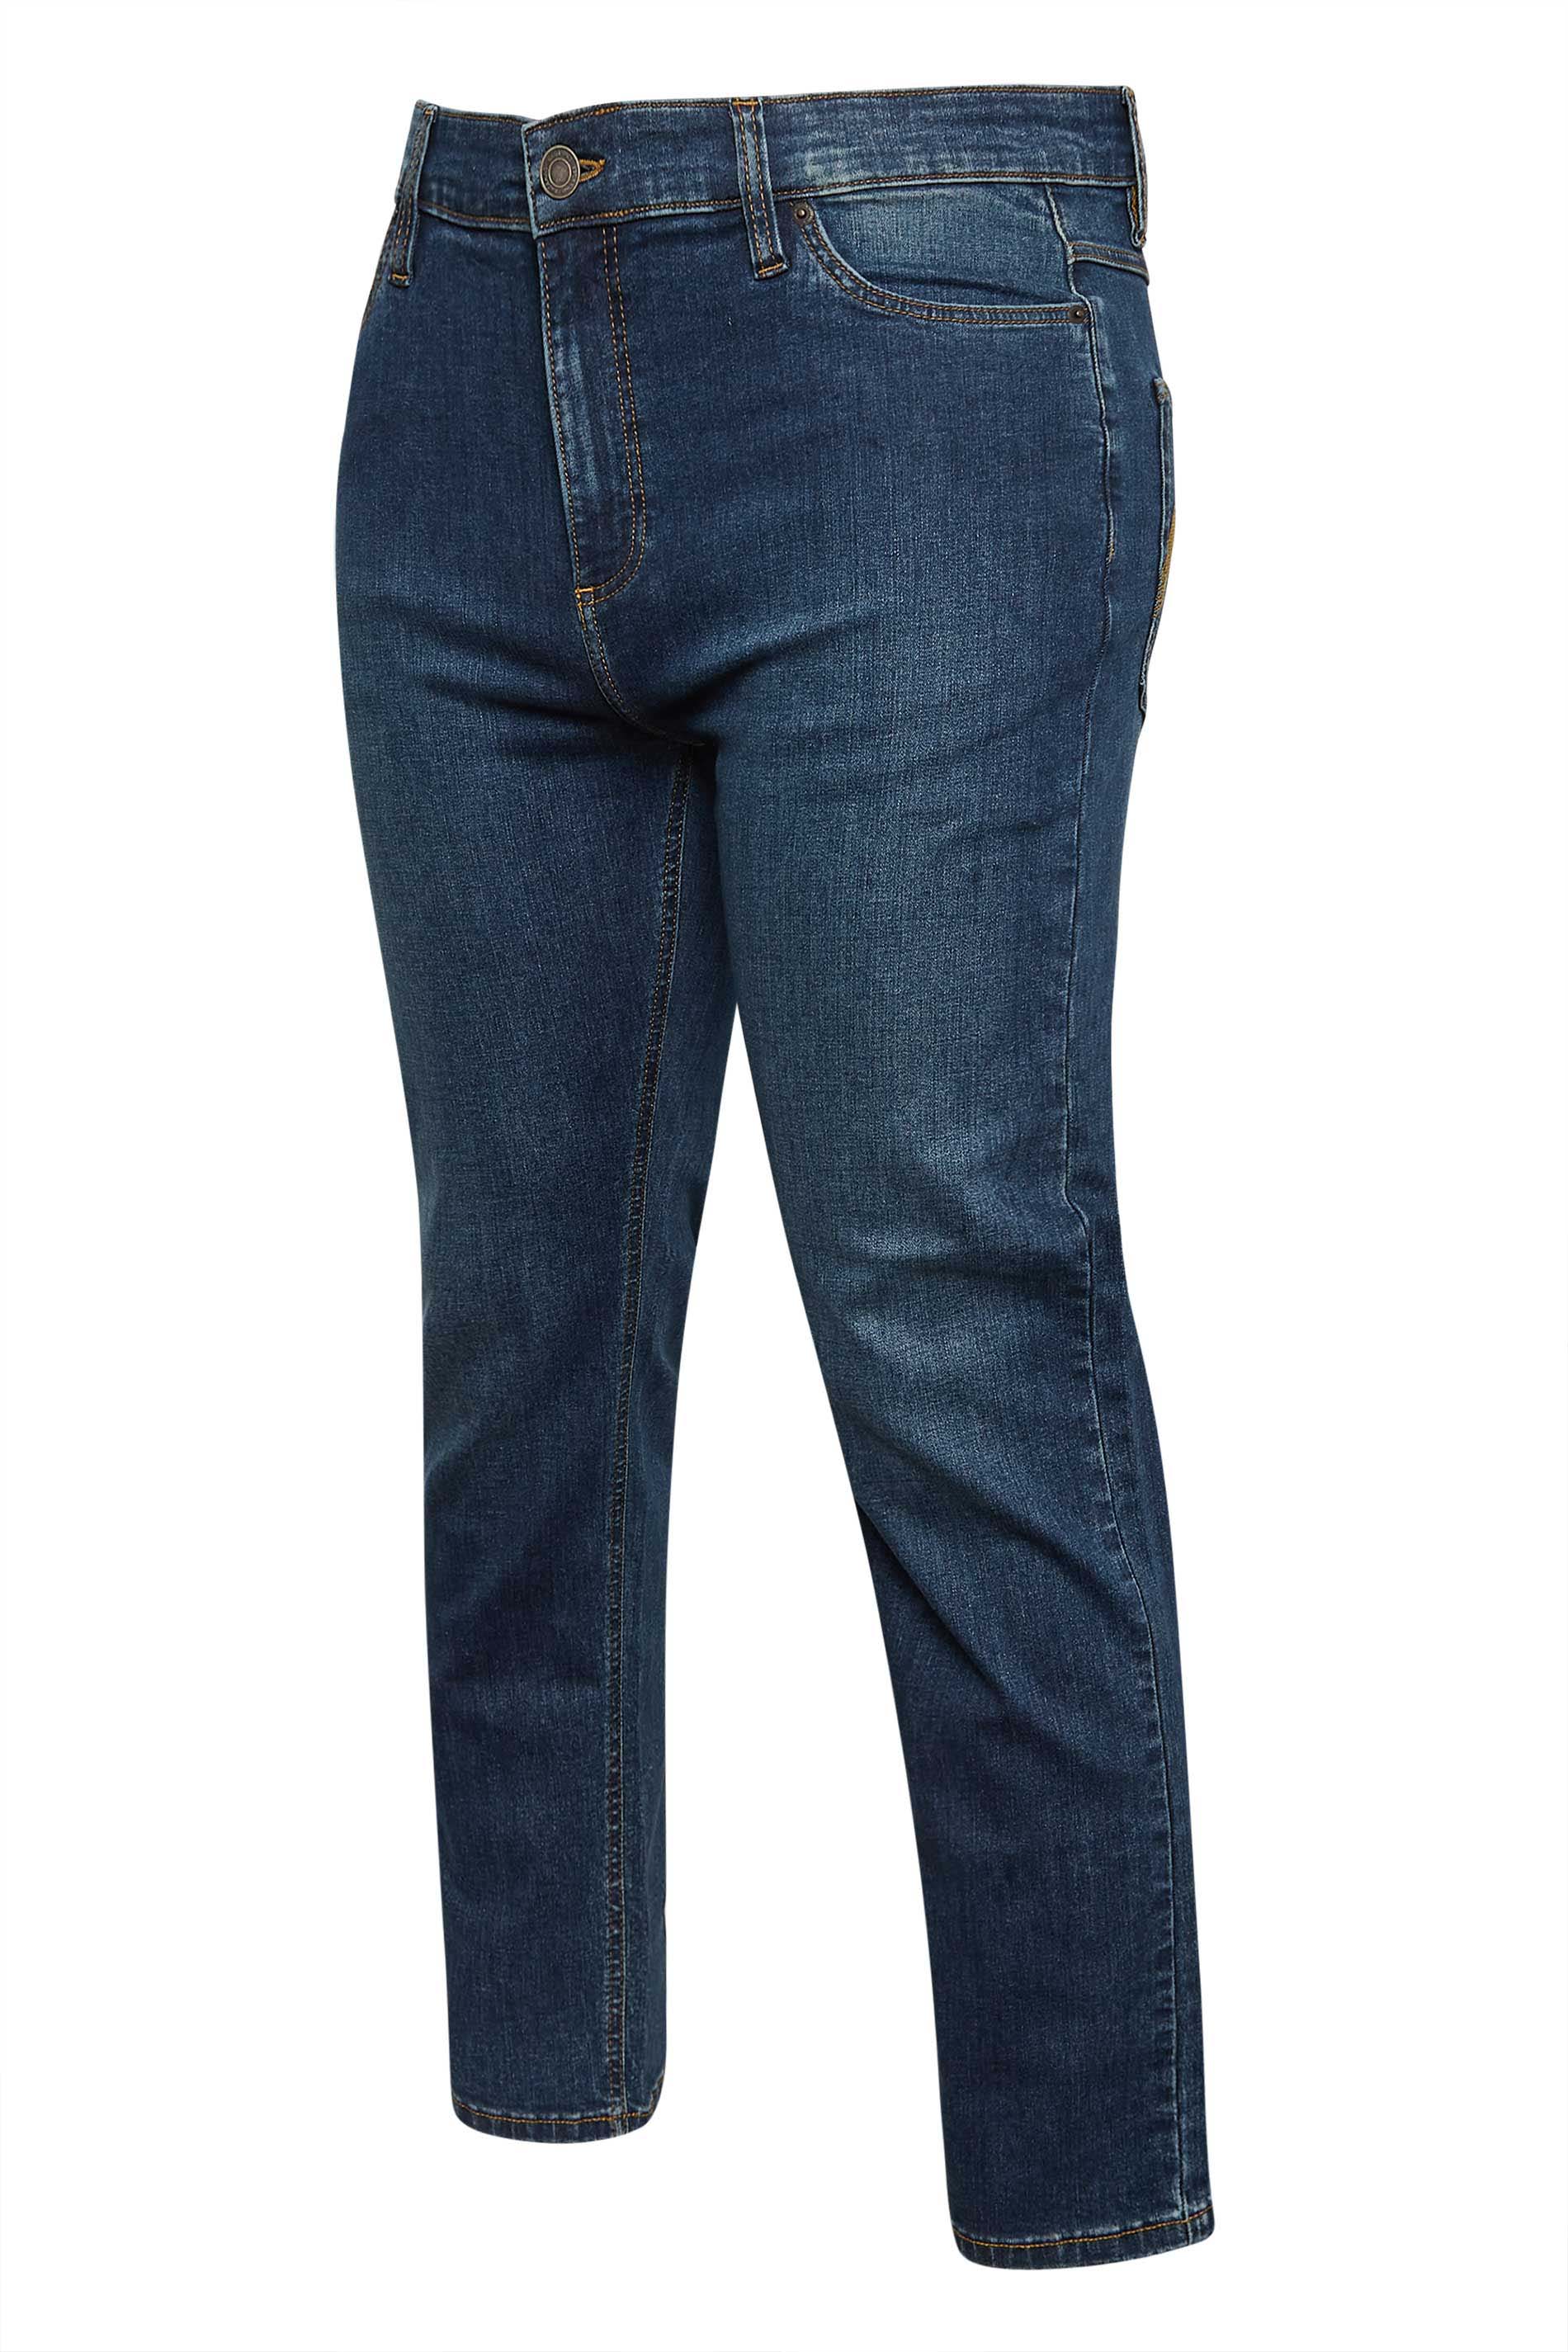 BadRhino Big & Tall Mid Blue Stretch Jeans | BadRhino 2